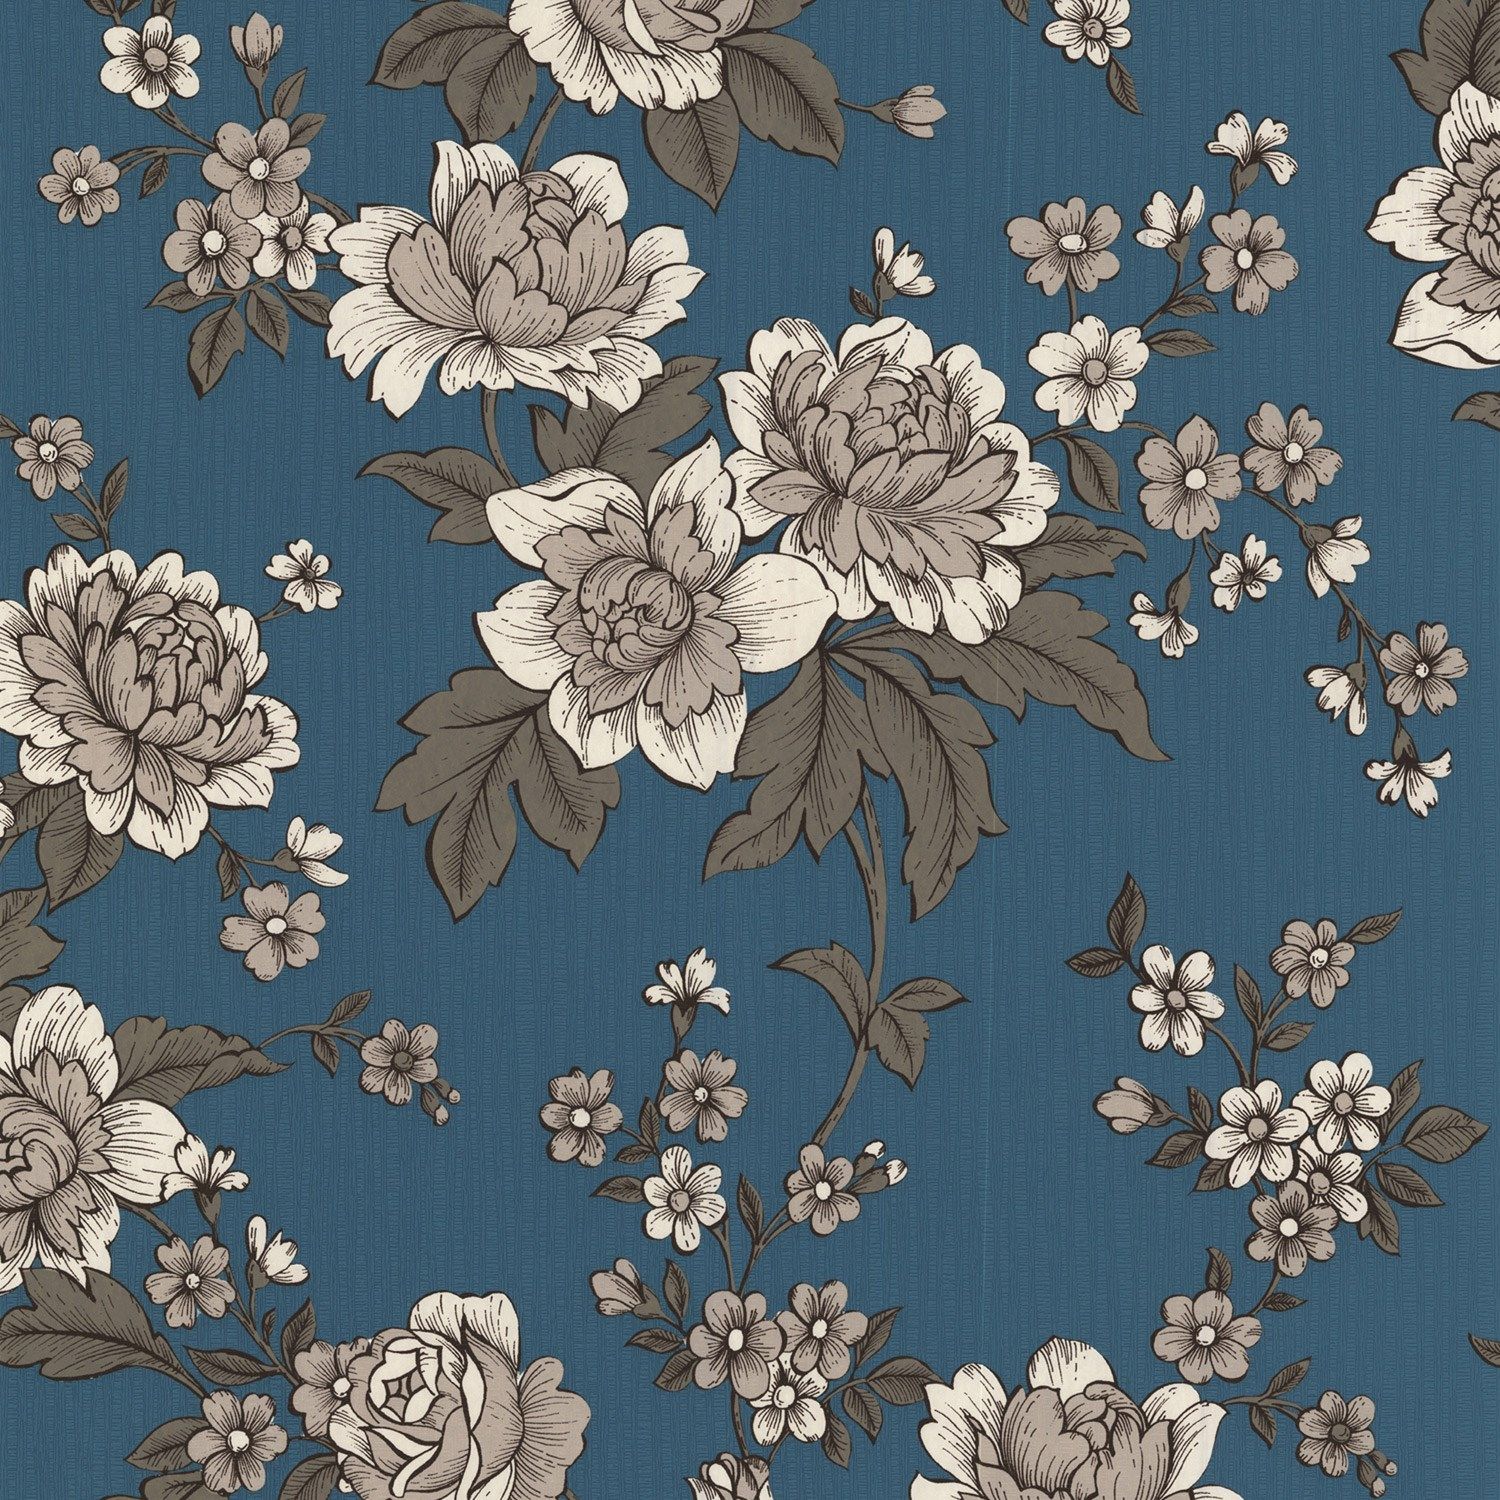 brown and teal wallpaper,pattern,floral design,wallpaper,flower,botany